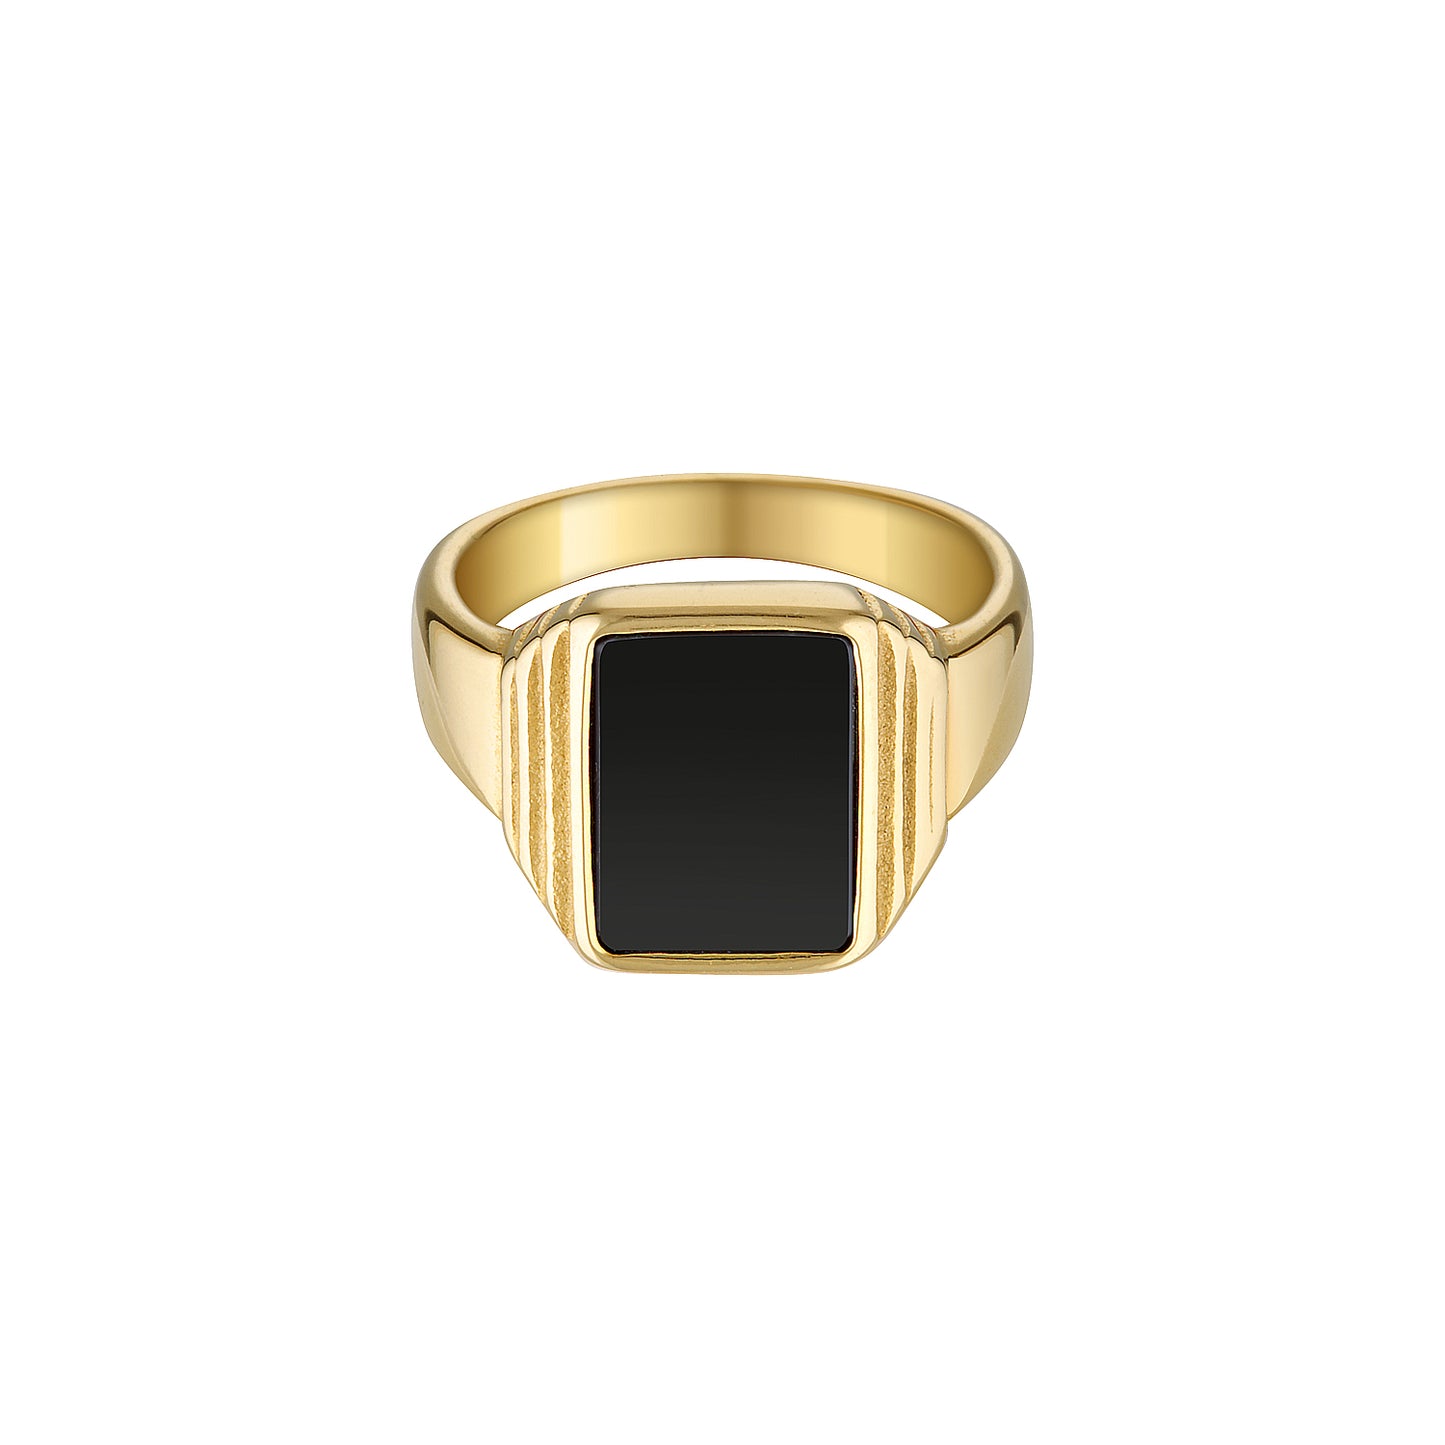 Aiya Gold and Black Signet Ring